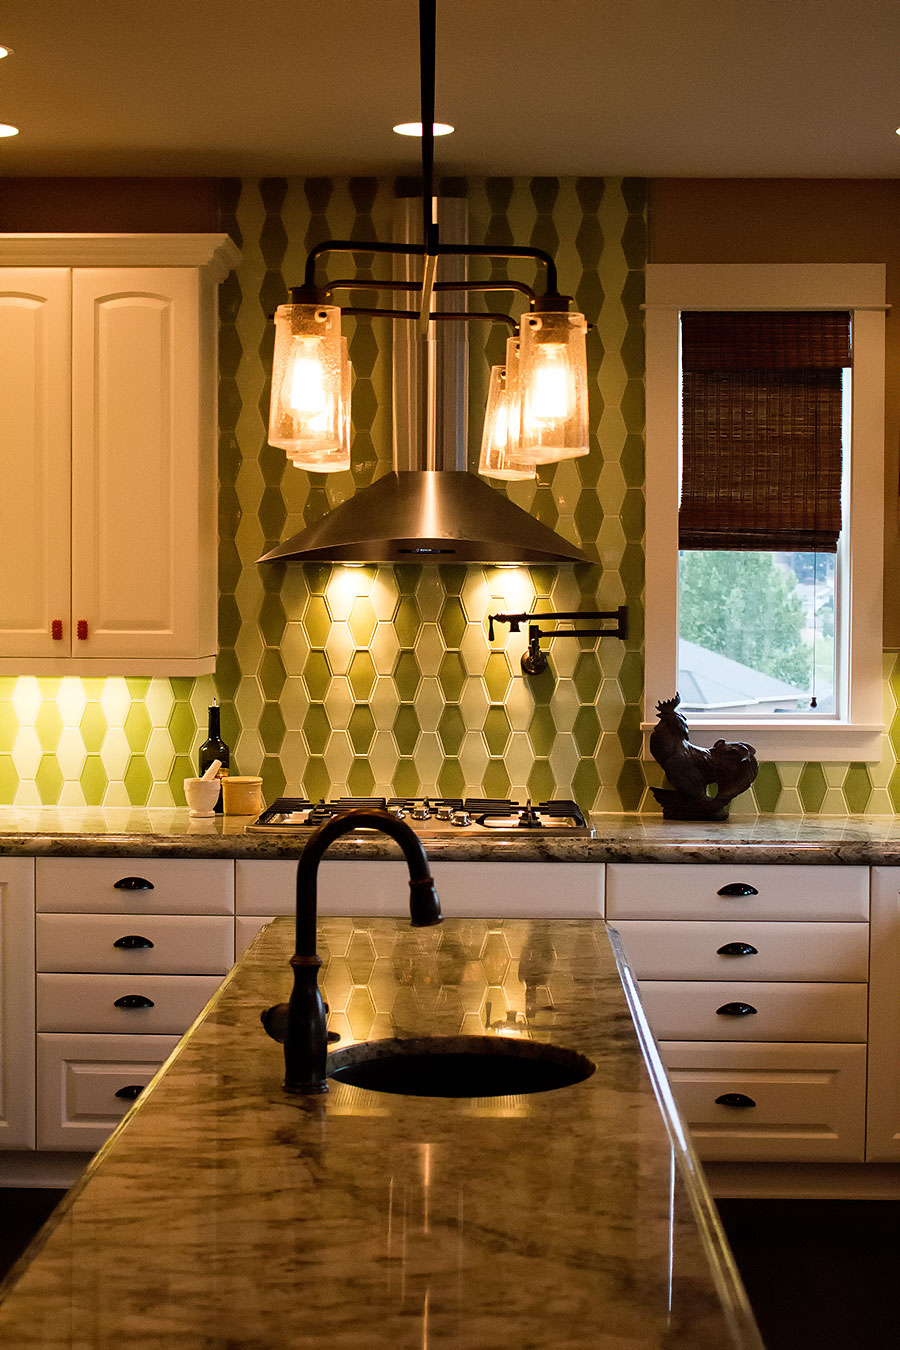 Custom Ann Sacks tile in kitchen interior design project. Rebecca Olsen Designs, Oregon